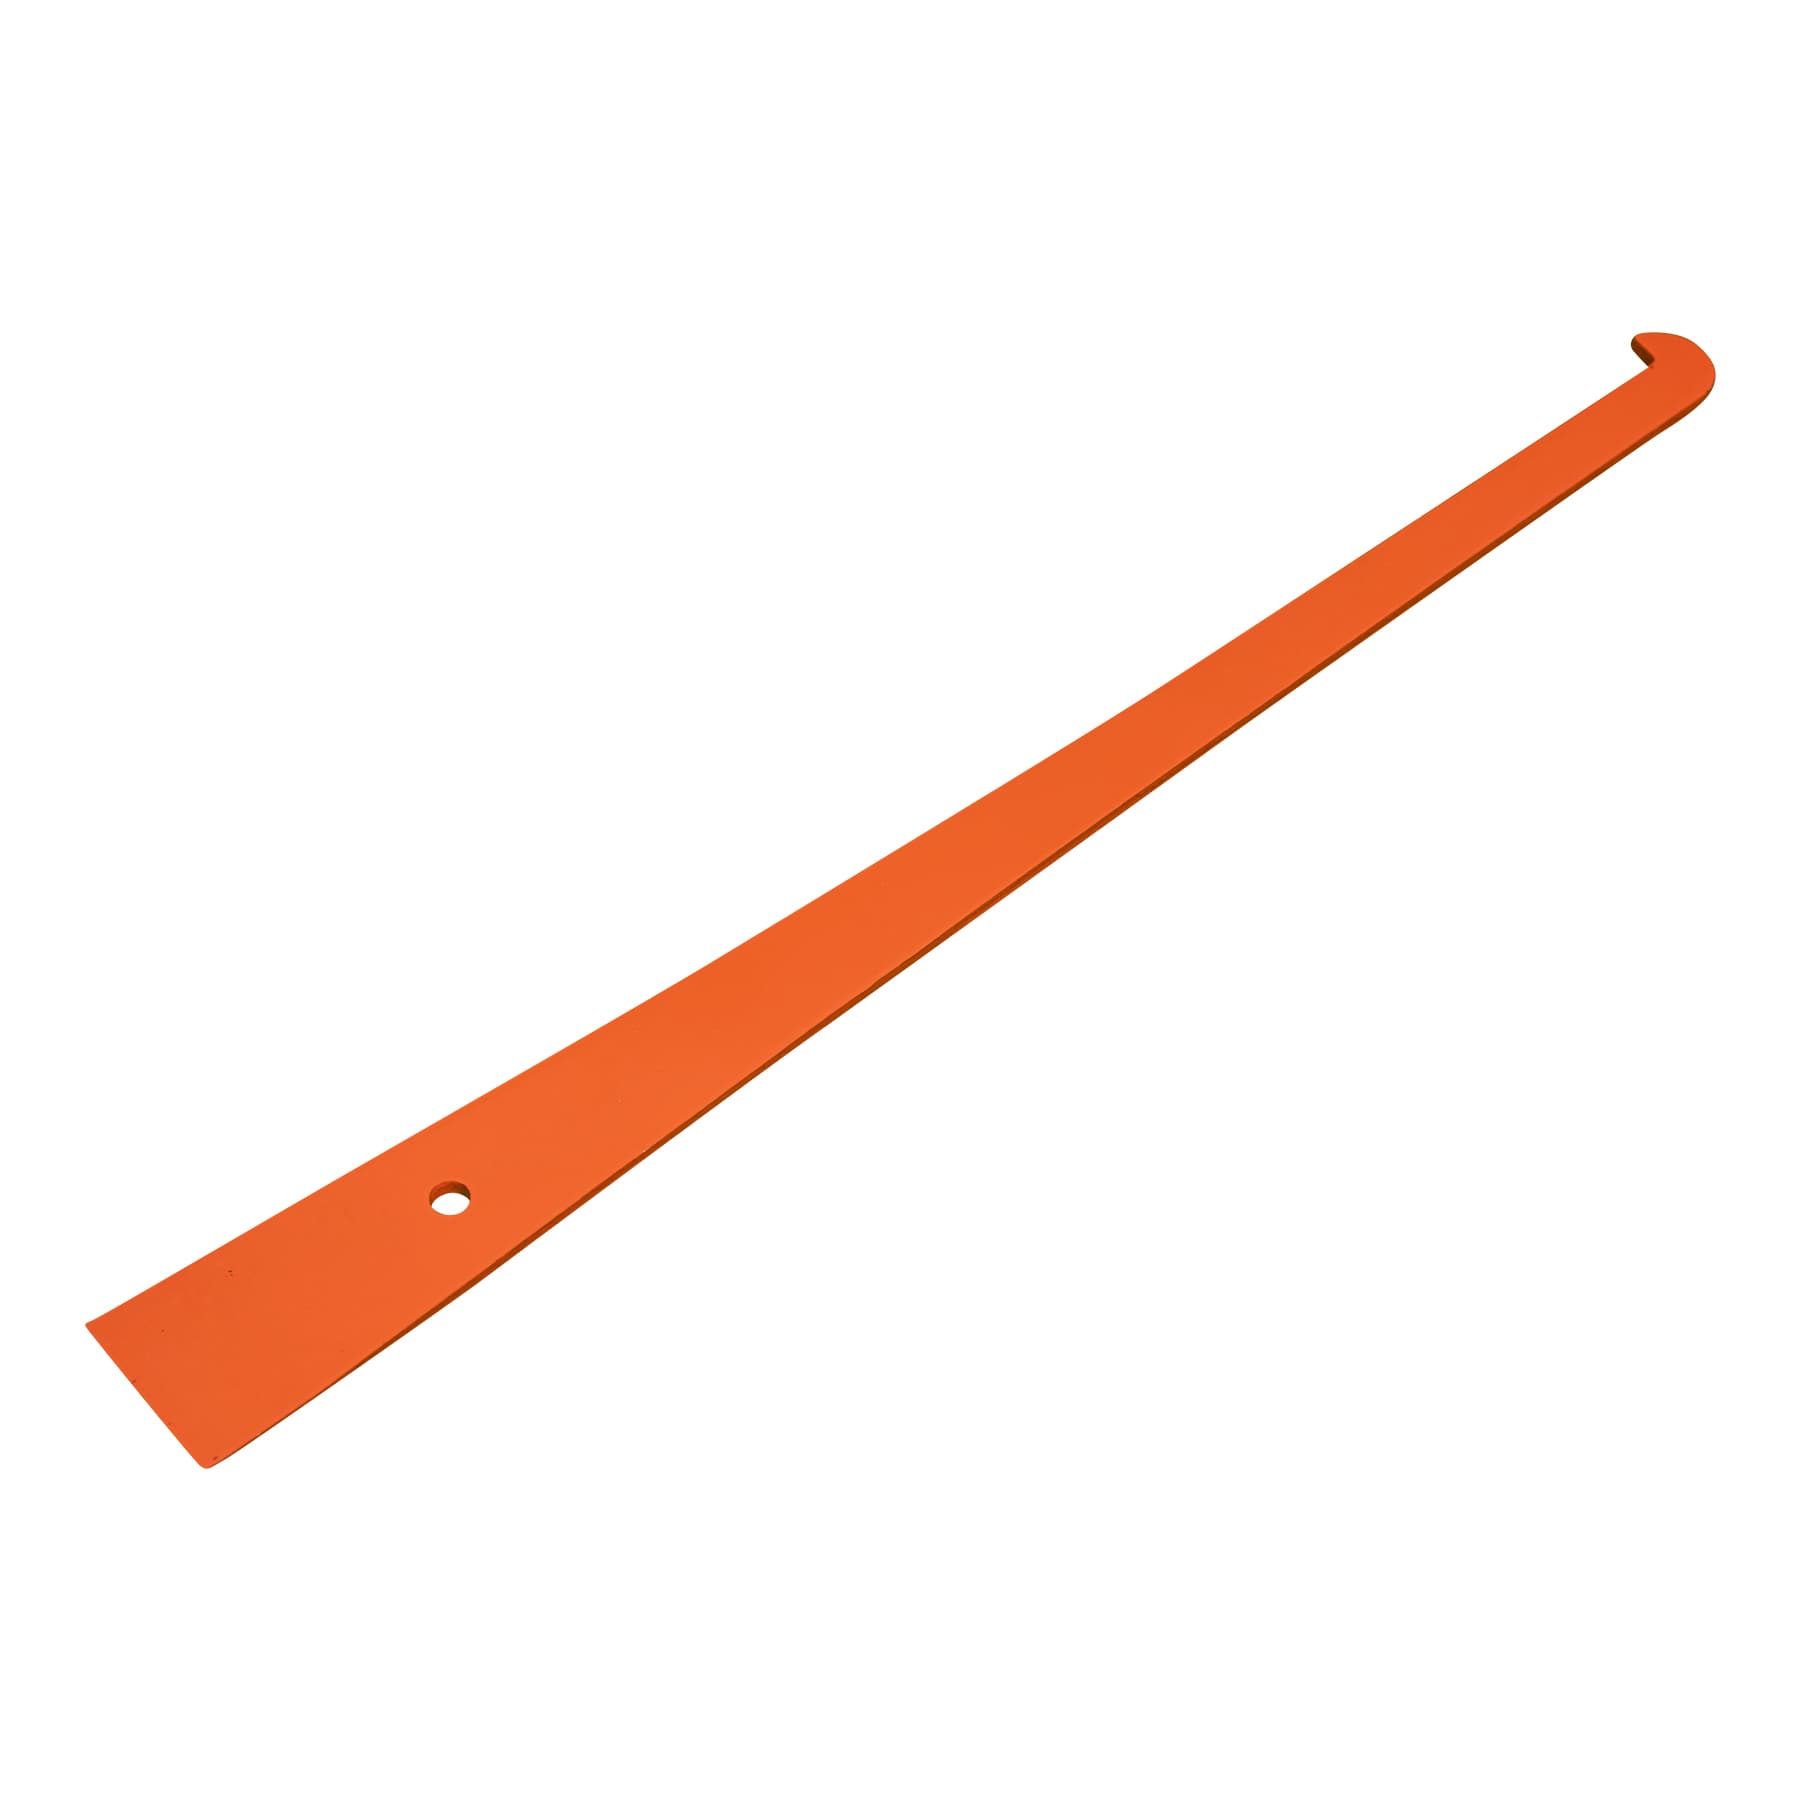 Stockmeissel schmal und extra lang, 31 cm lang, orange